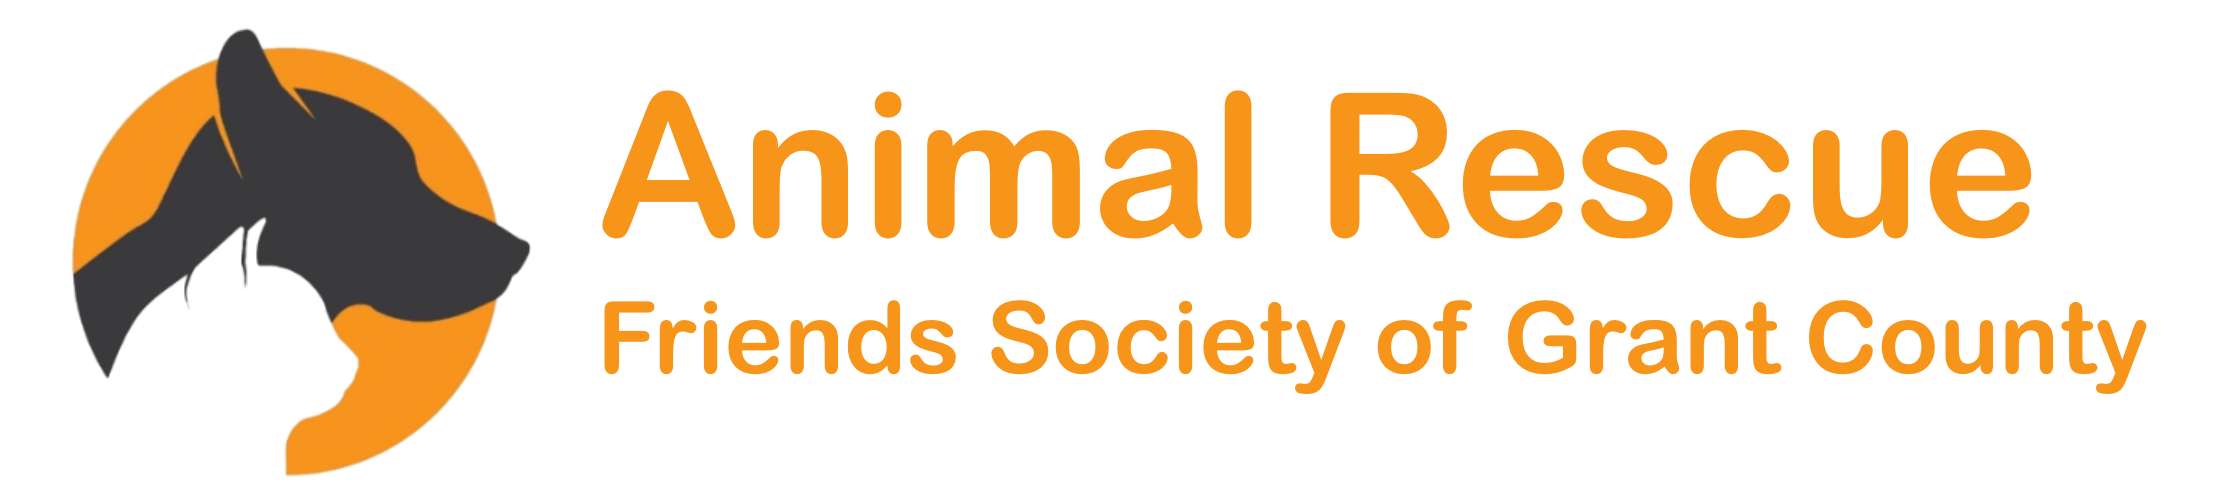 Animal Rescue Friends Society of Grant County Washington